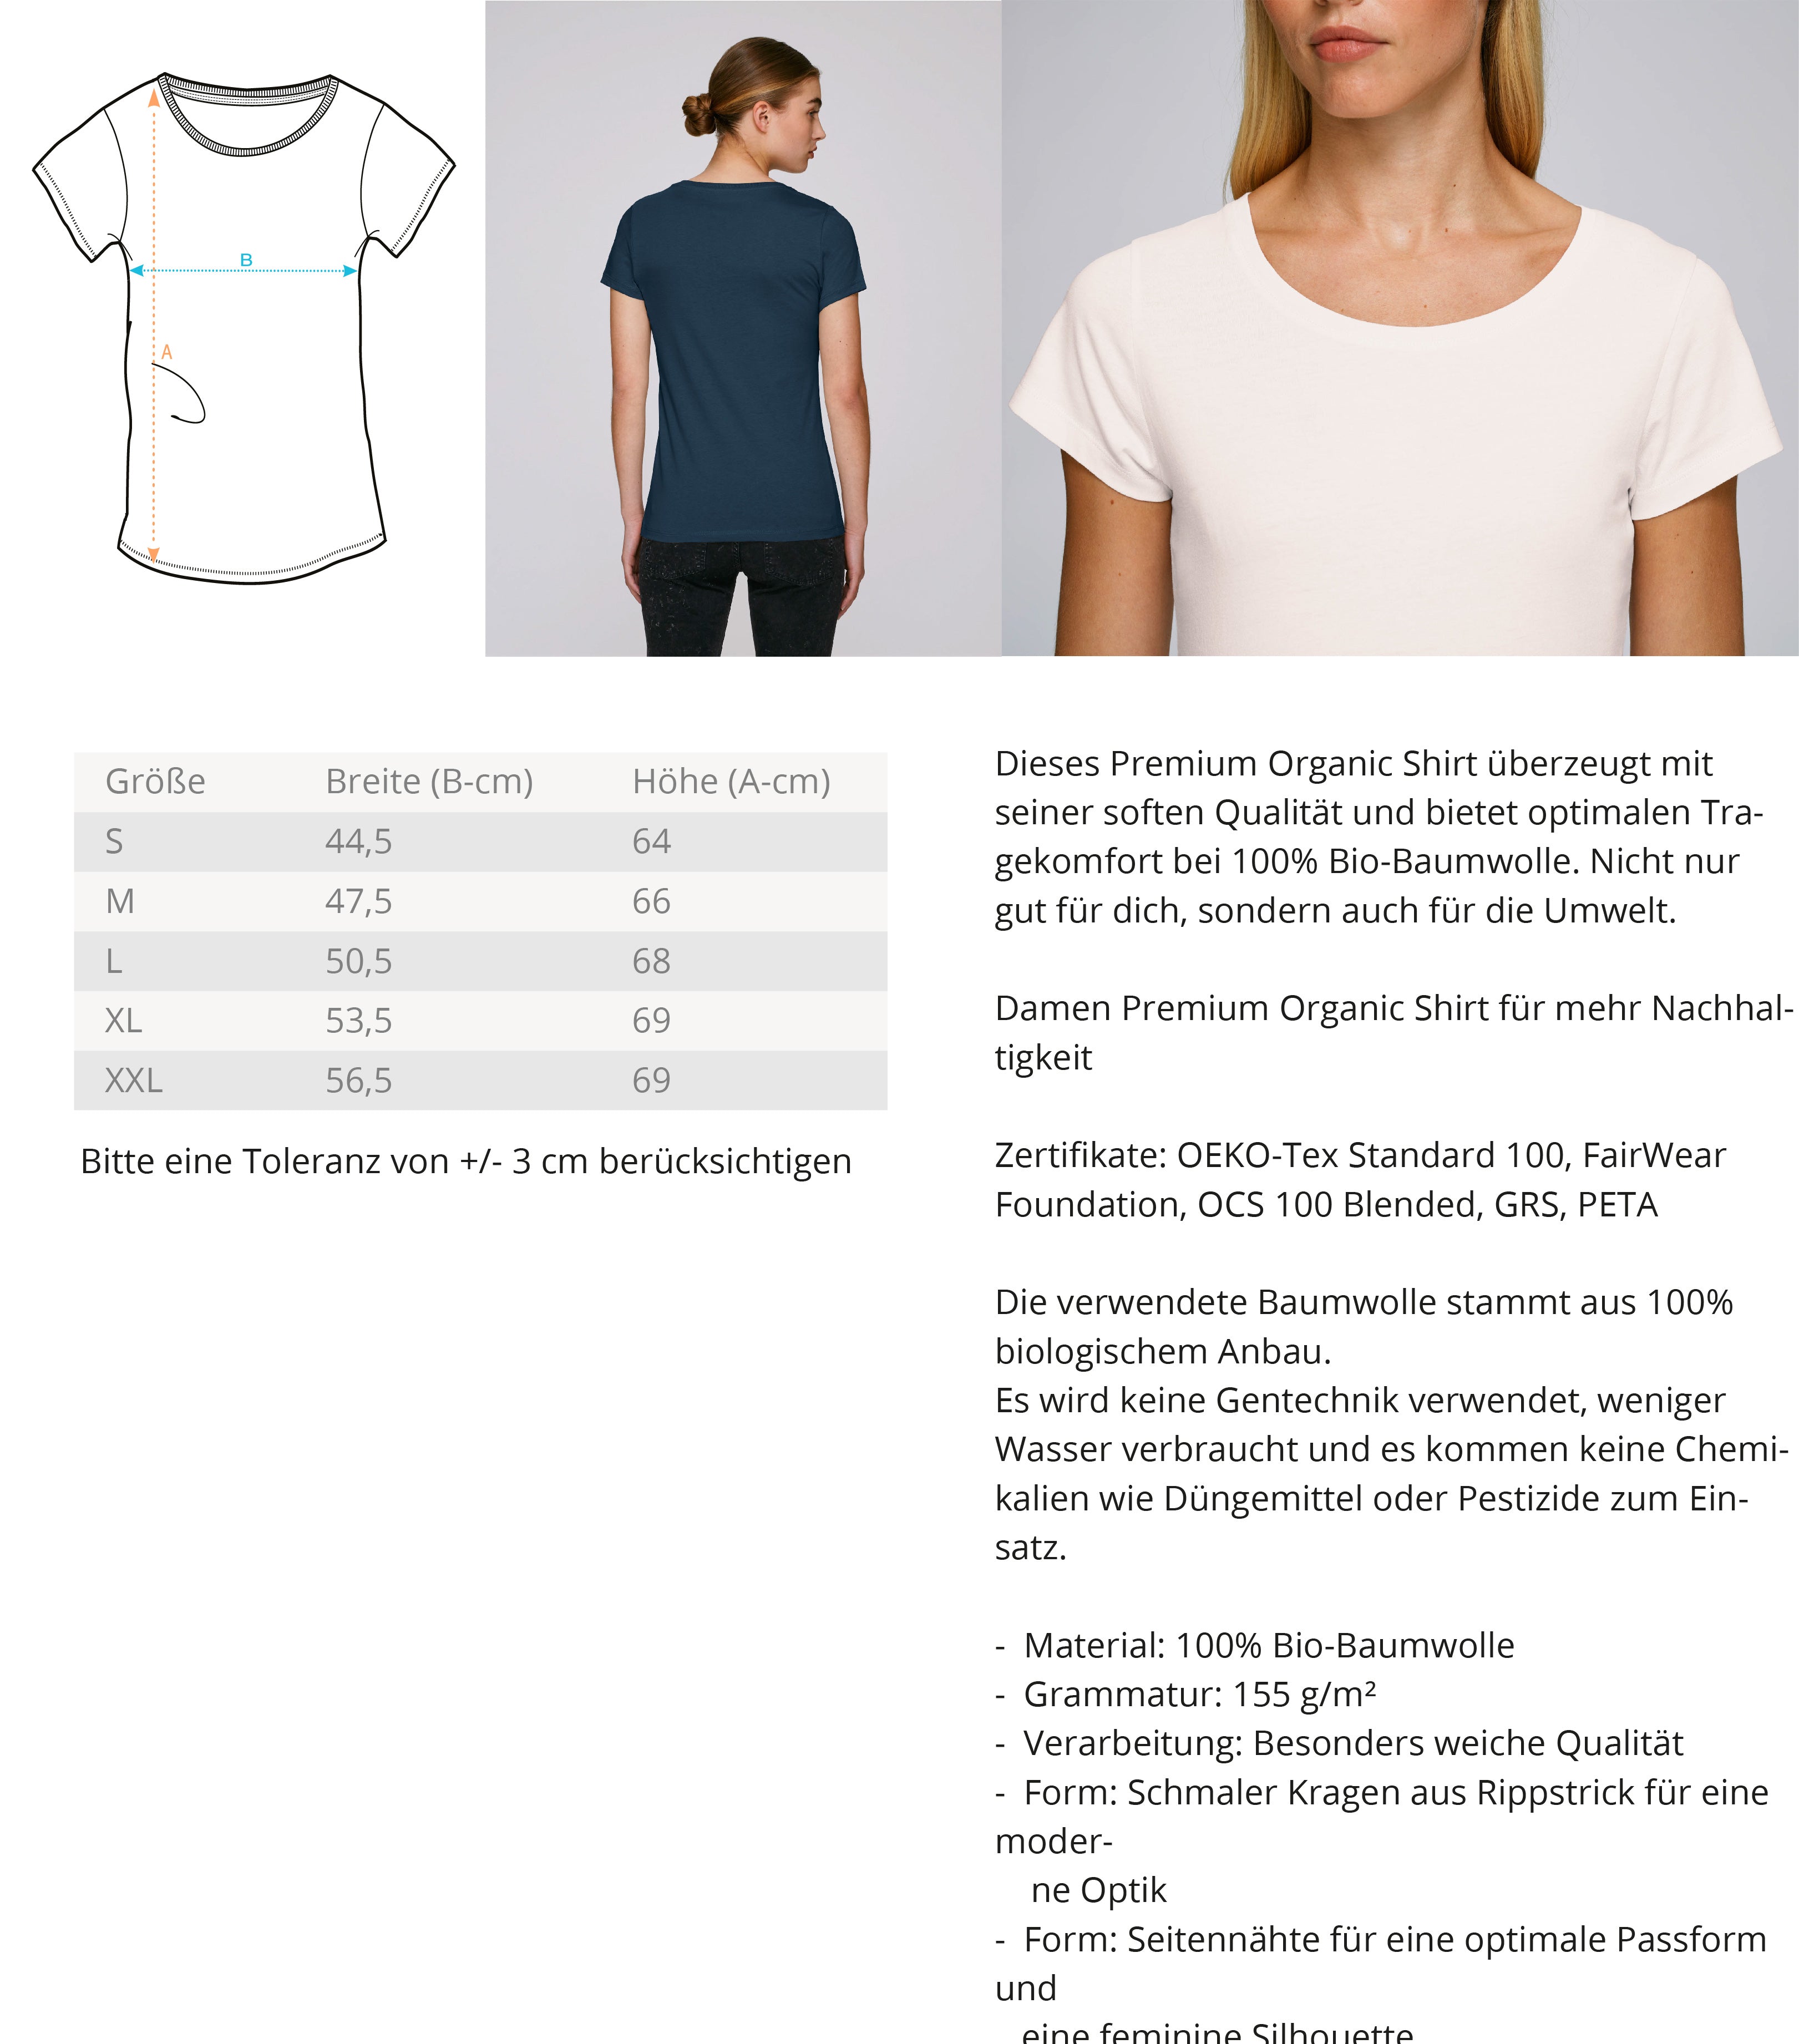 Give yourself time  - Damen Premium Organic Shirt